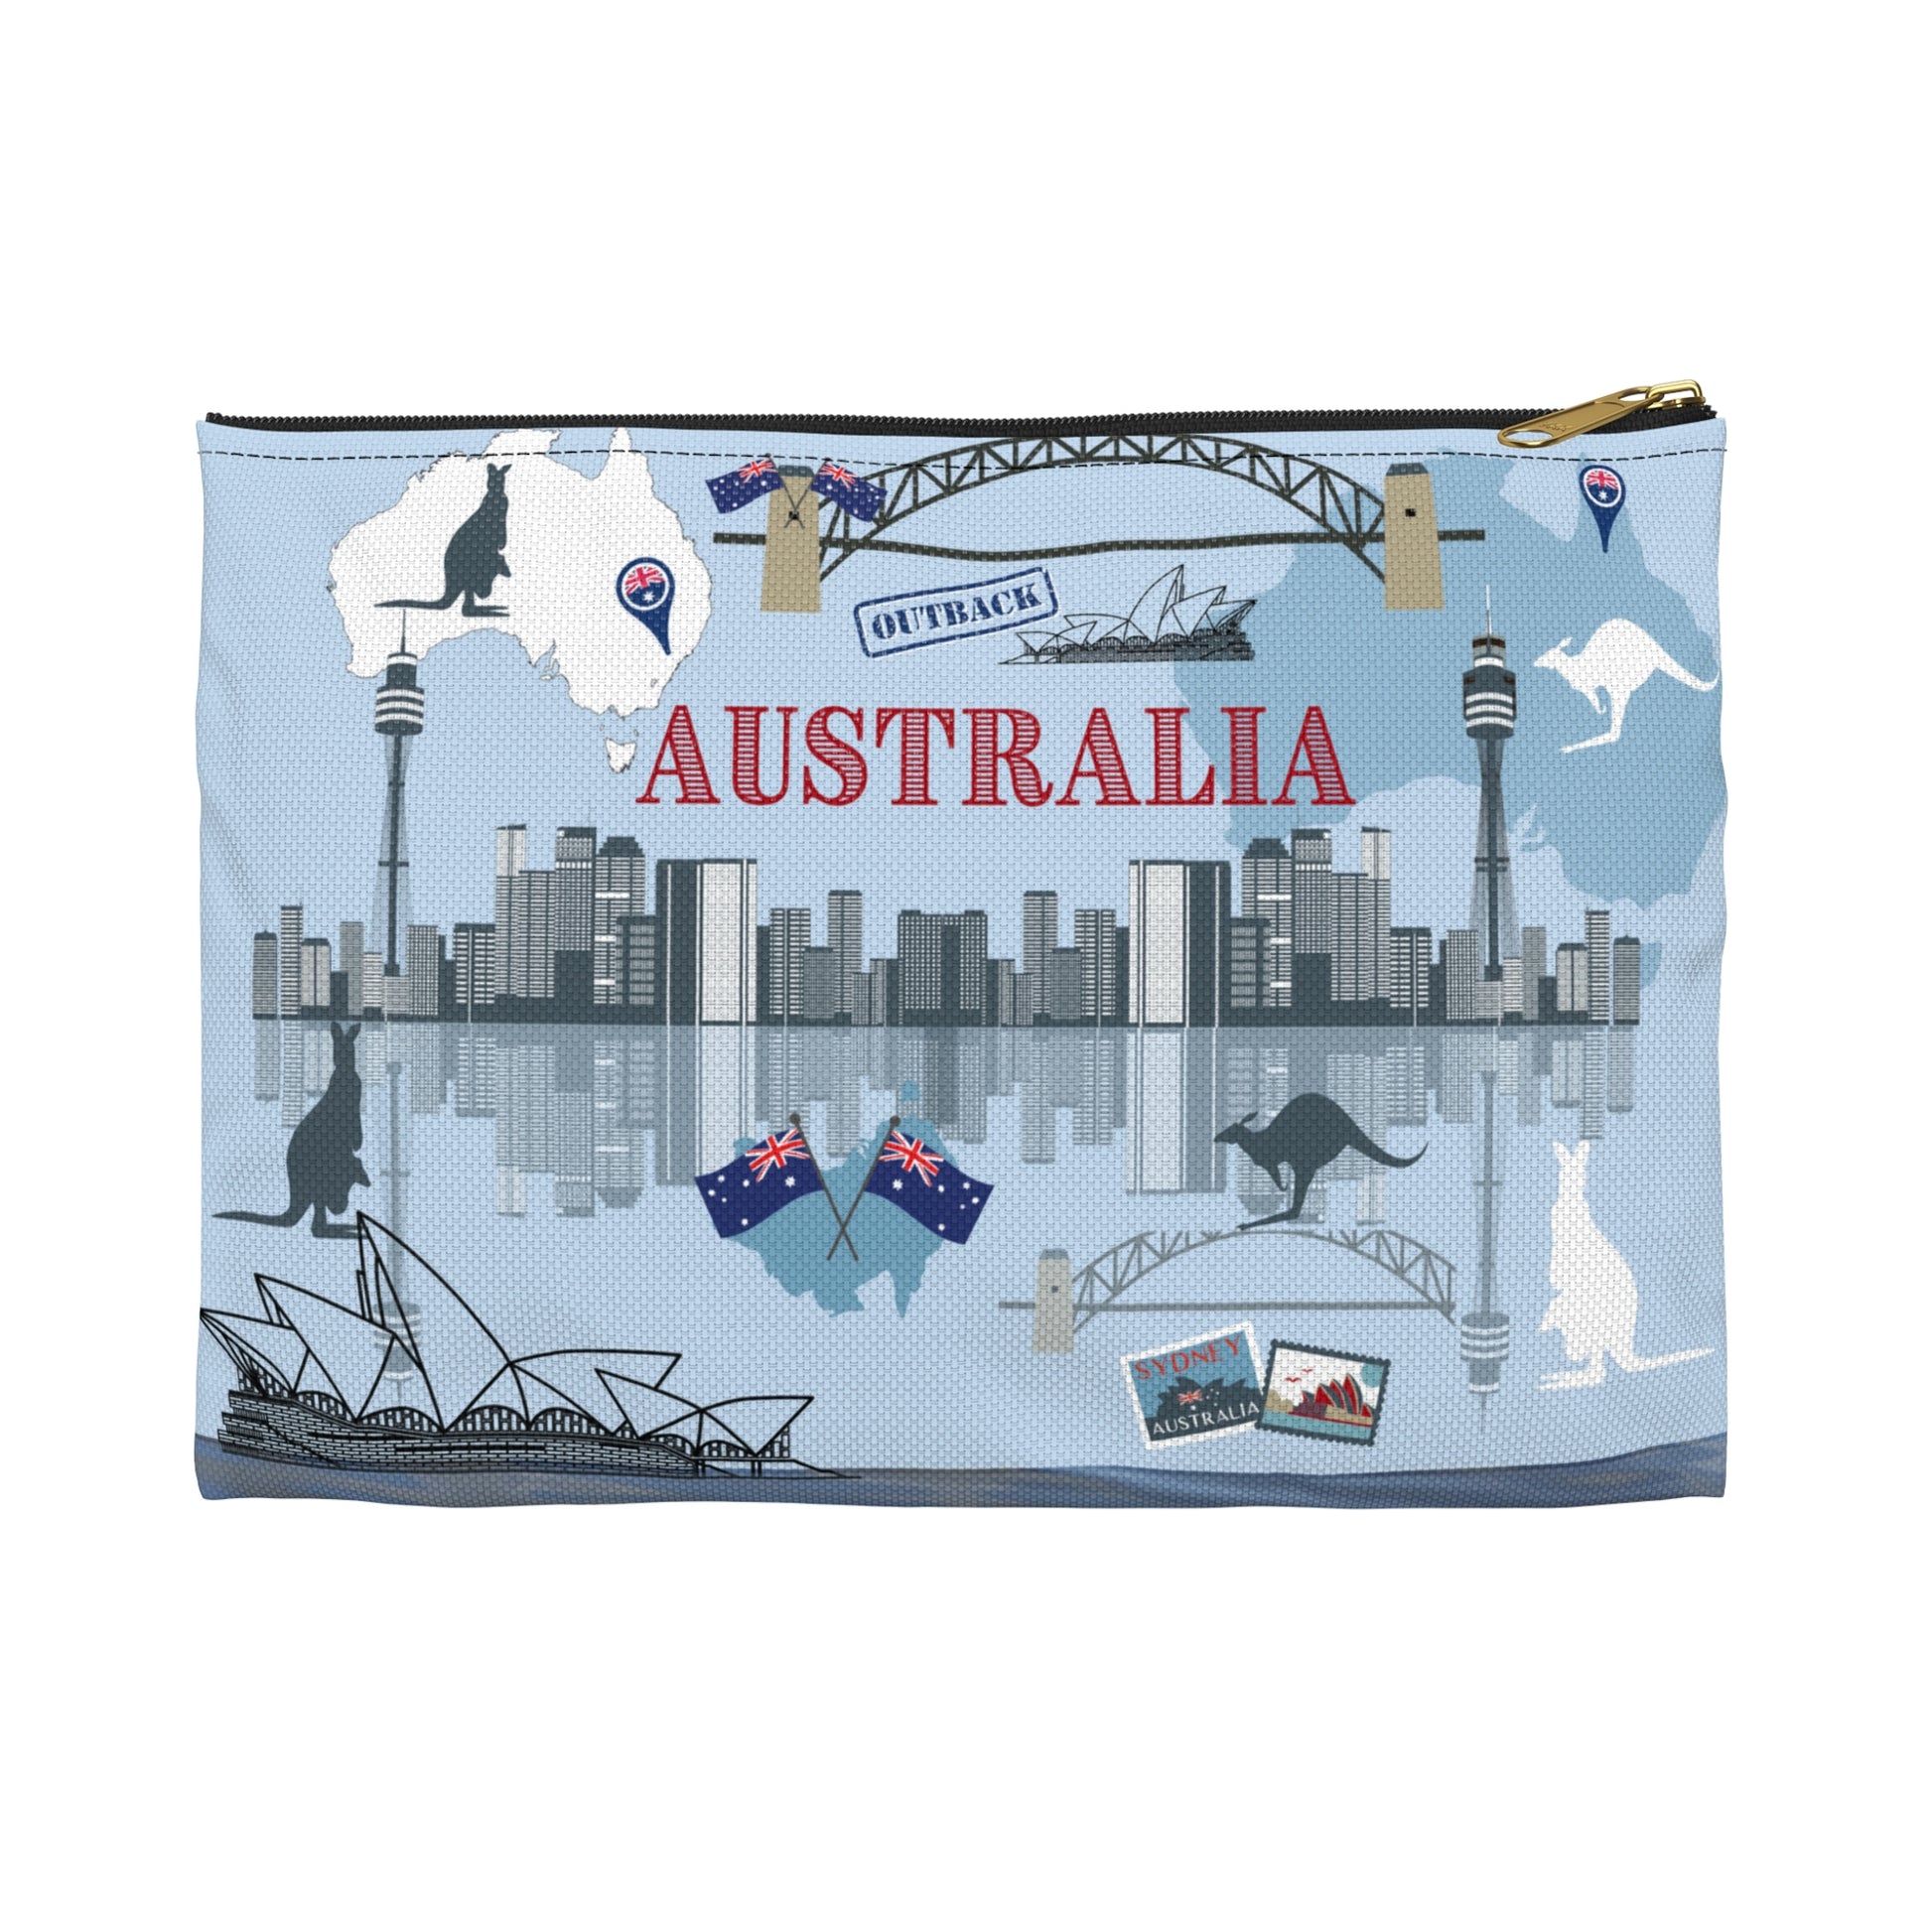 Unique Australia Design Pouch